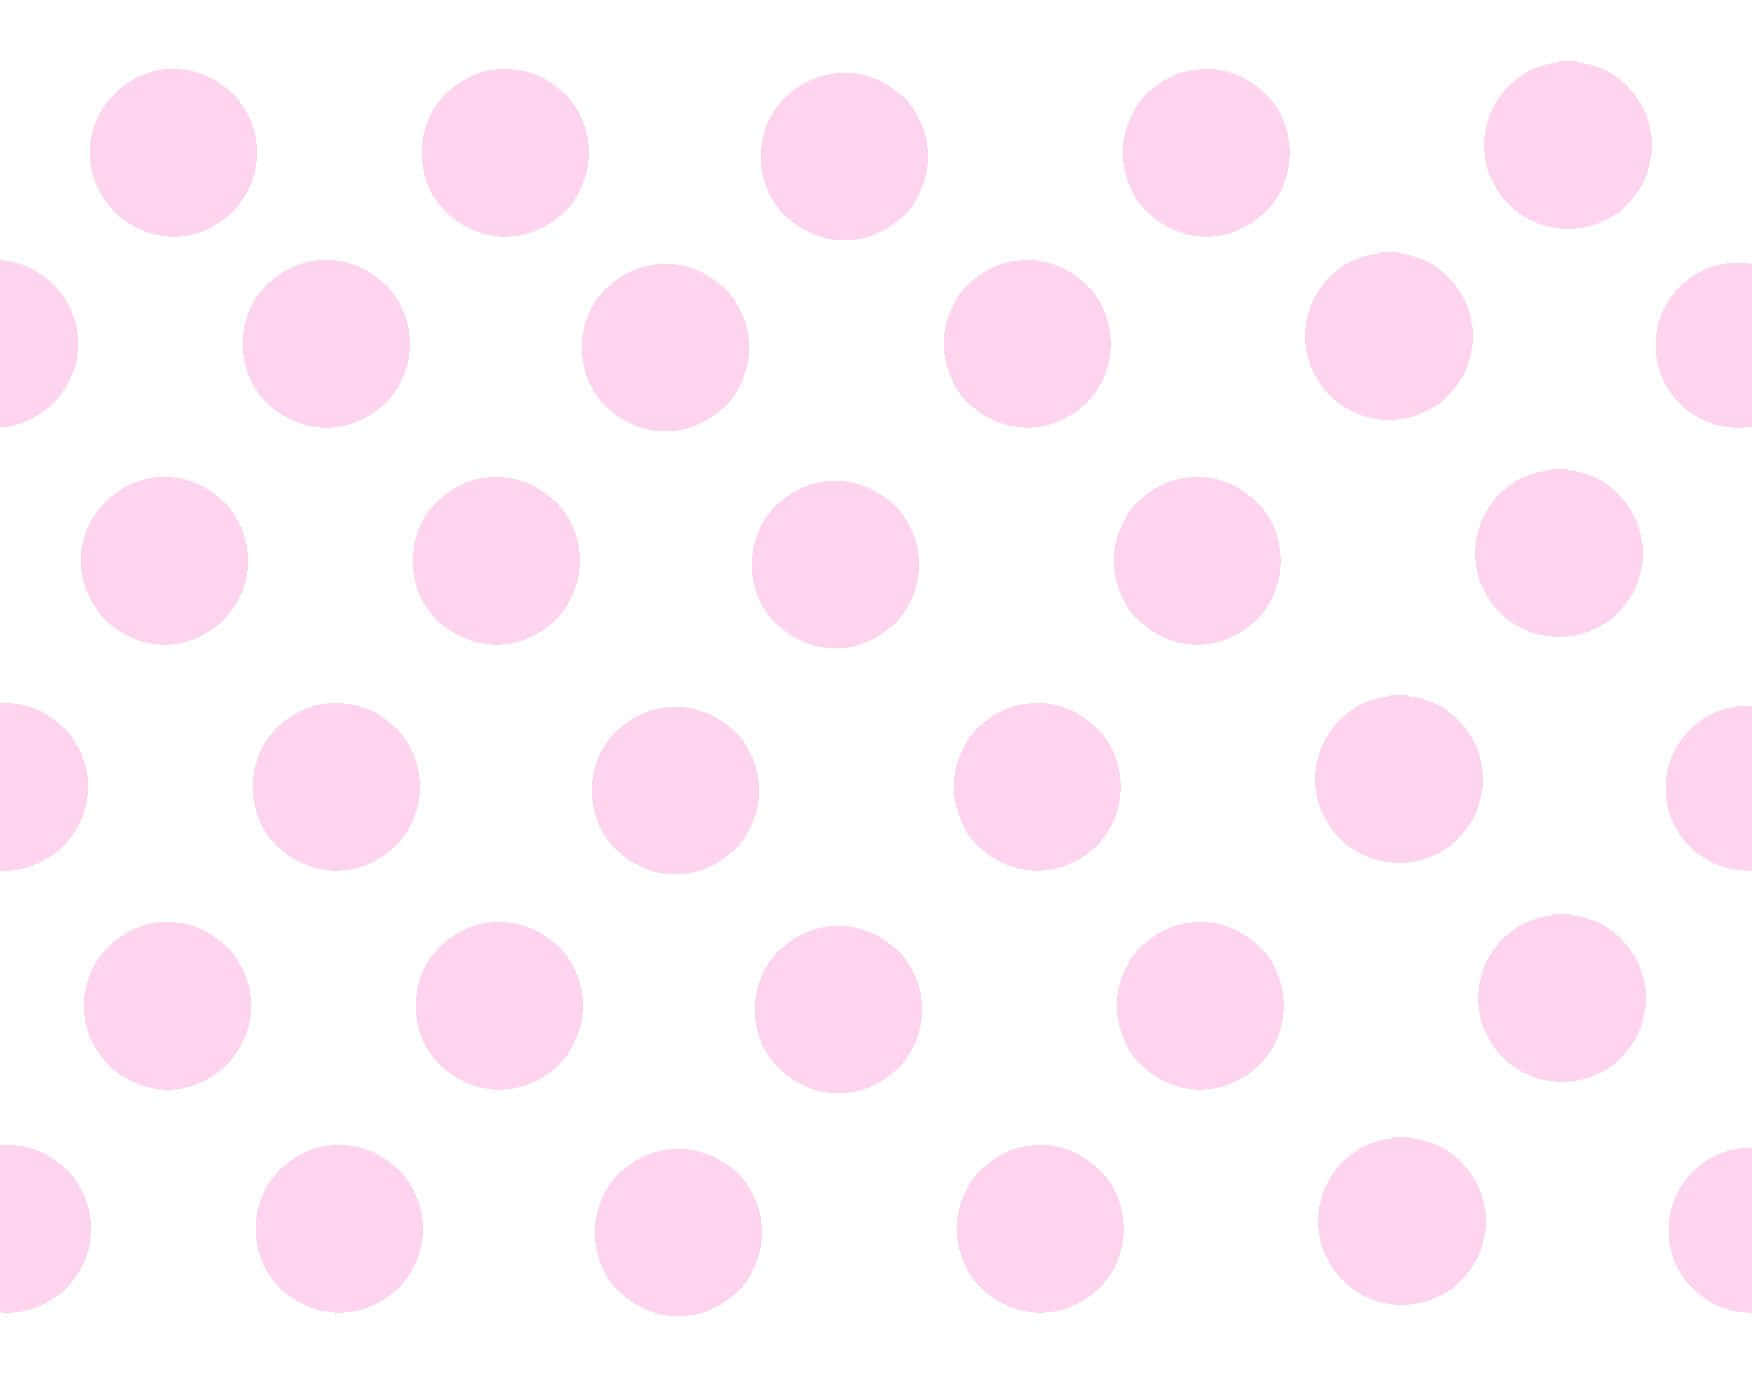 A classic pink polka dot background.